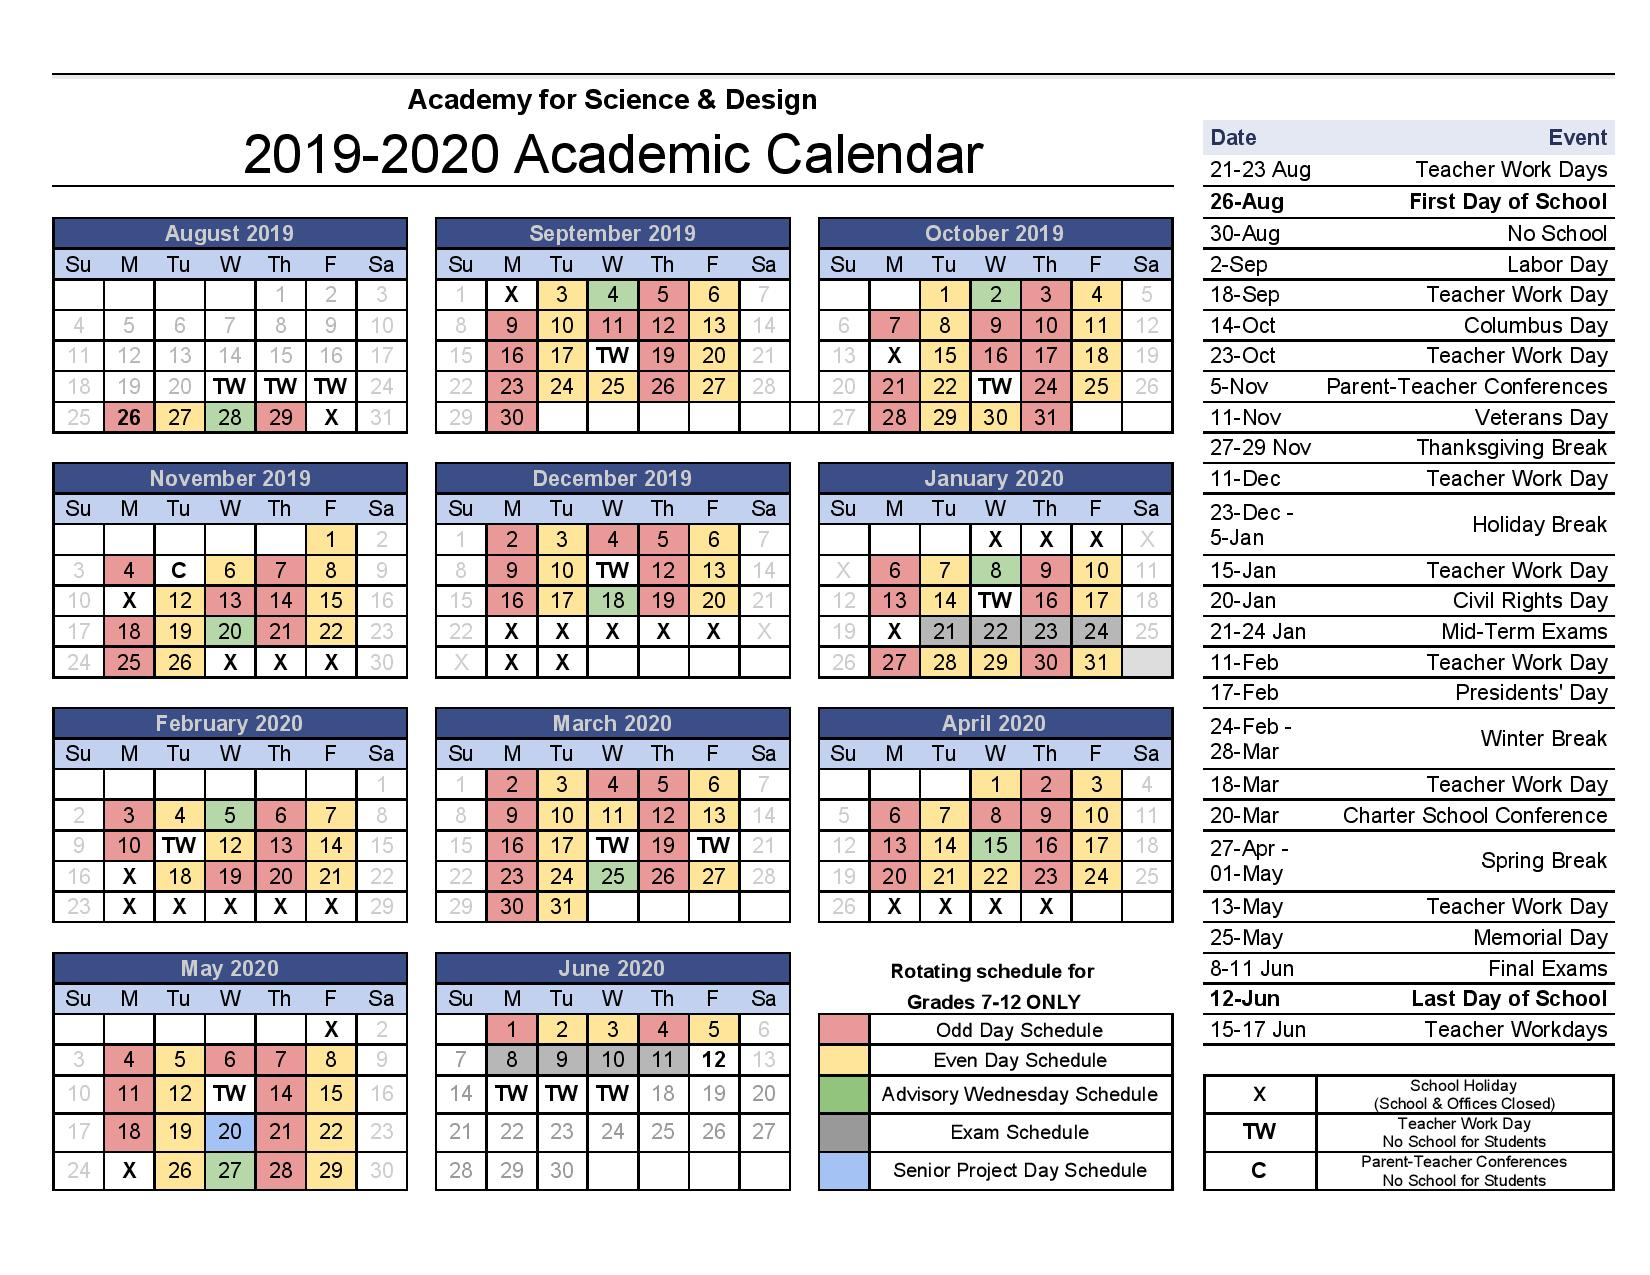 uc-berkeley-2019-2020-academic-calendar-calendar-inspiration-design-2024-calendar-printable